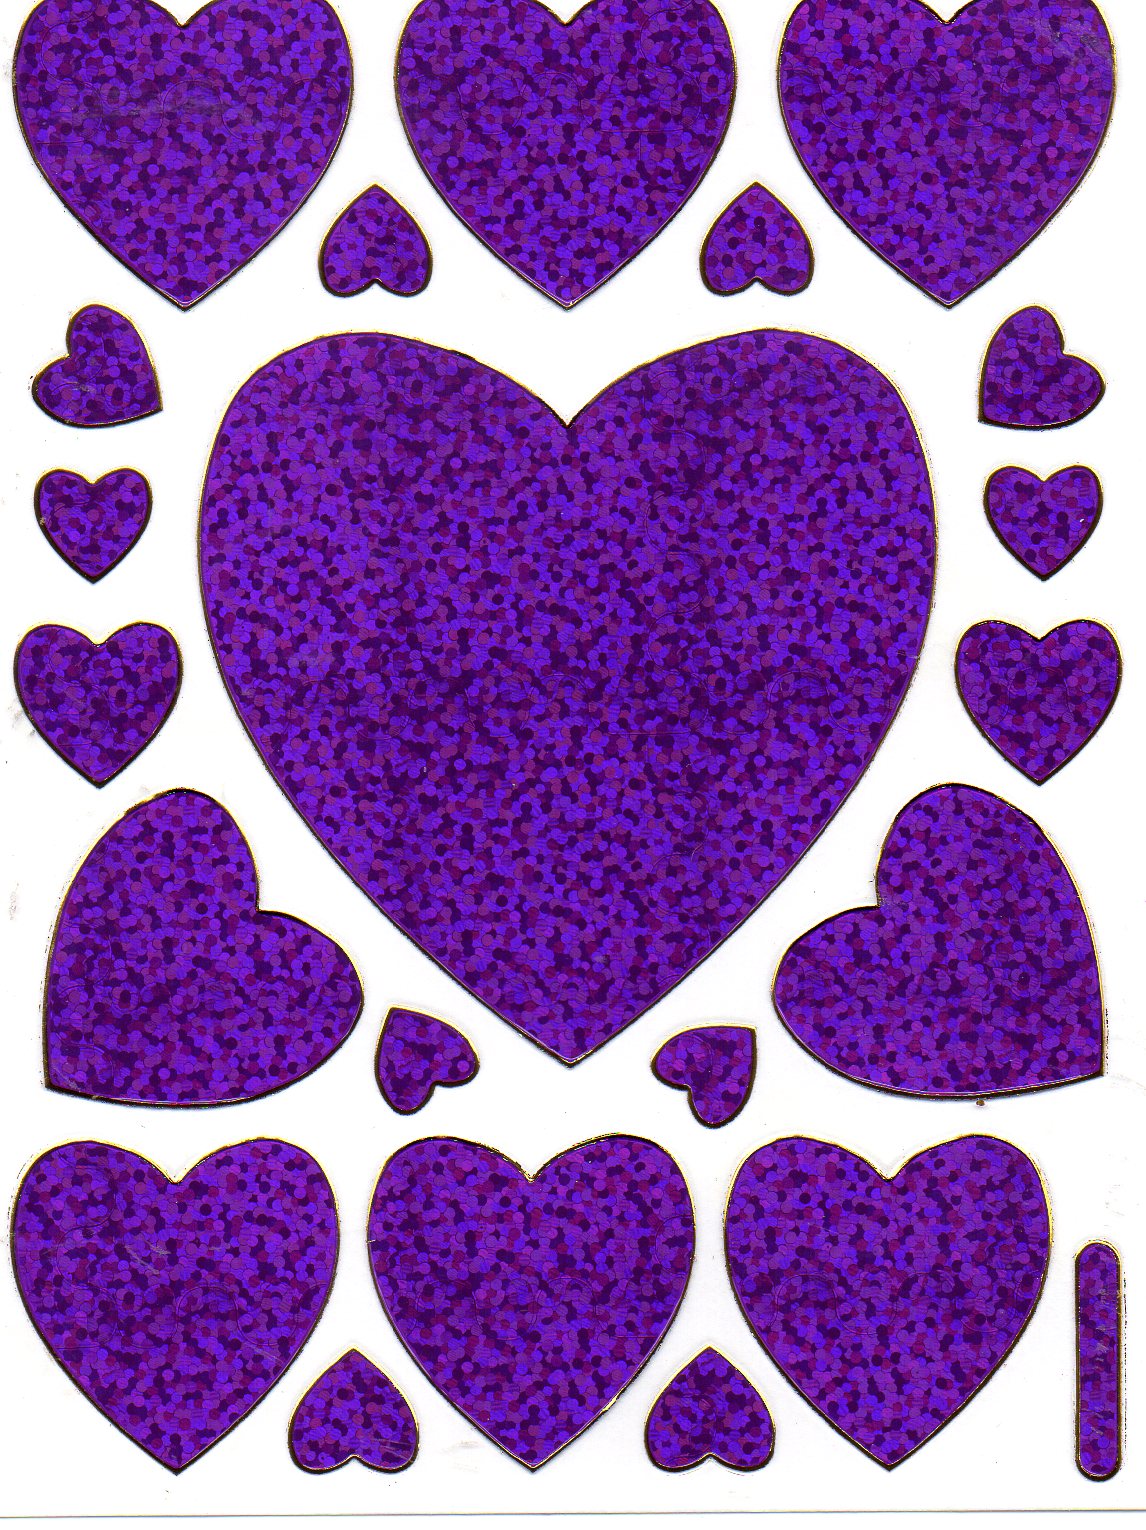 Heart hearts purple love stickers metallic glitter effect for children crafts kindergarten 1 sheet 472